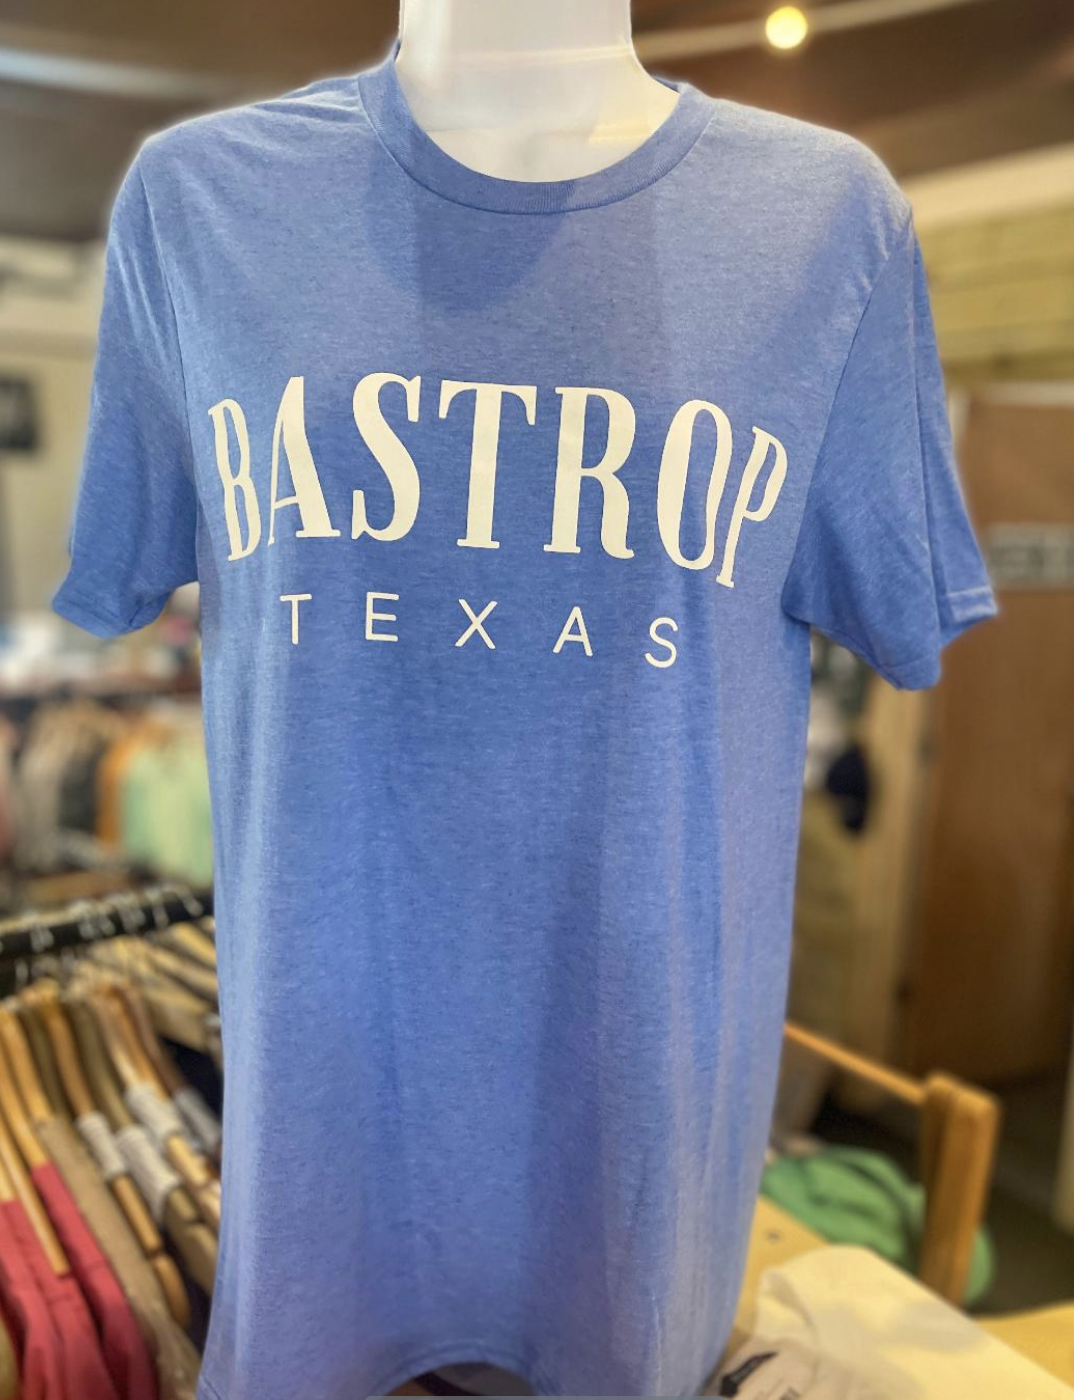 BASTROP TEXAS BLUE TSHIRT